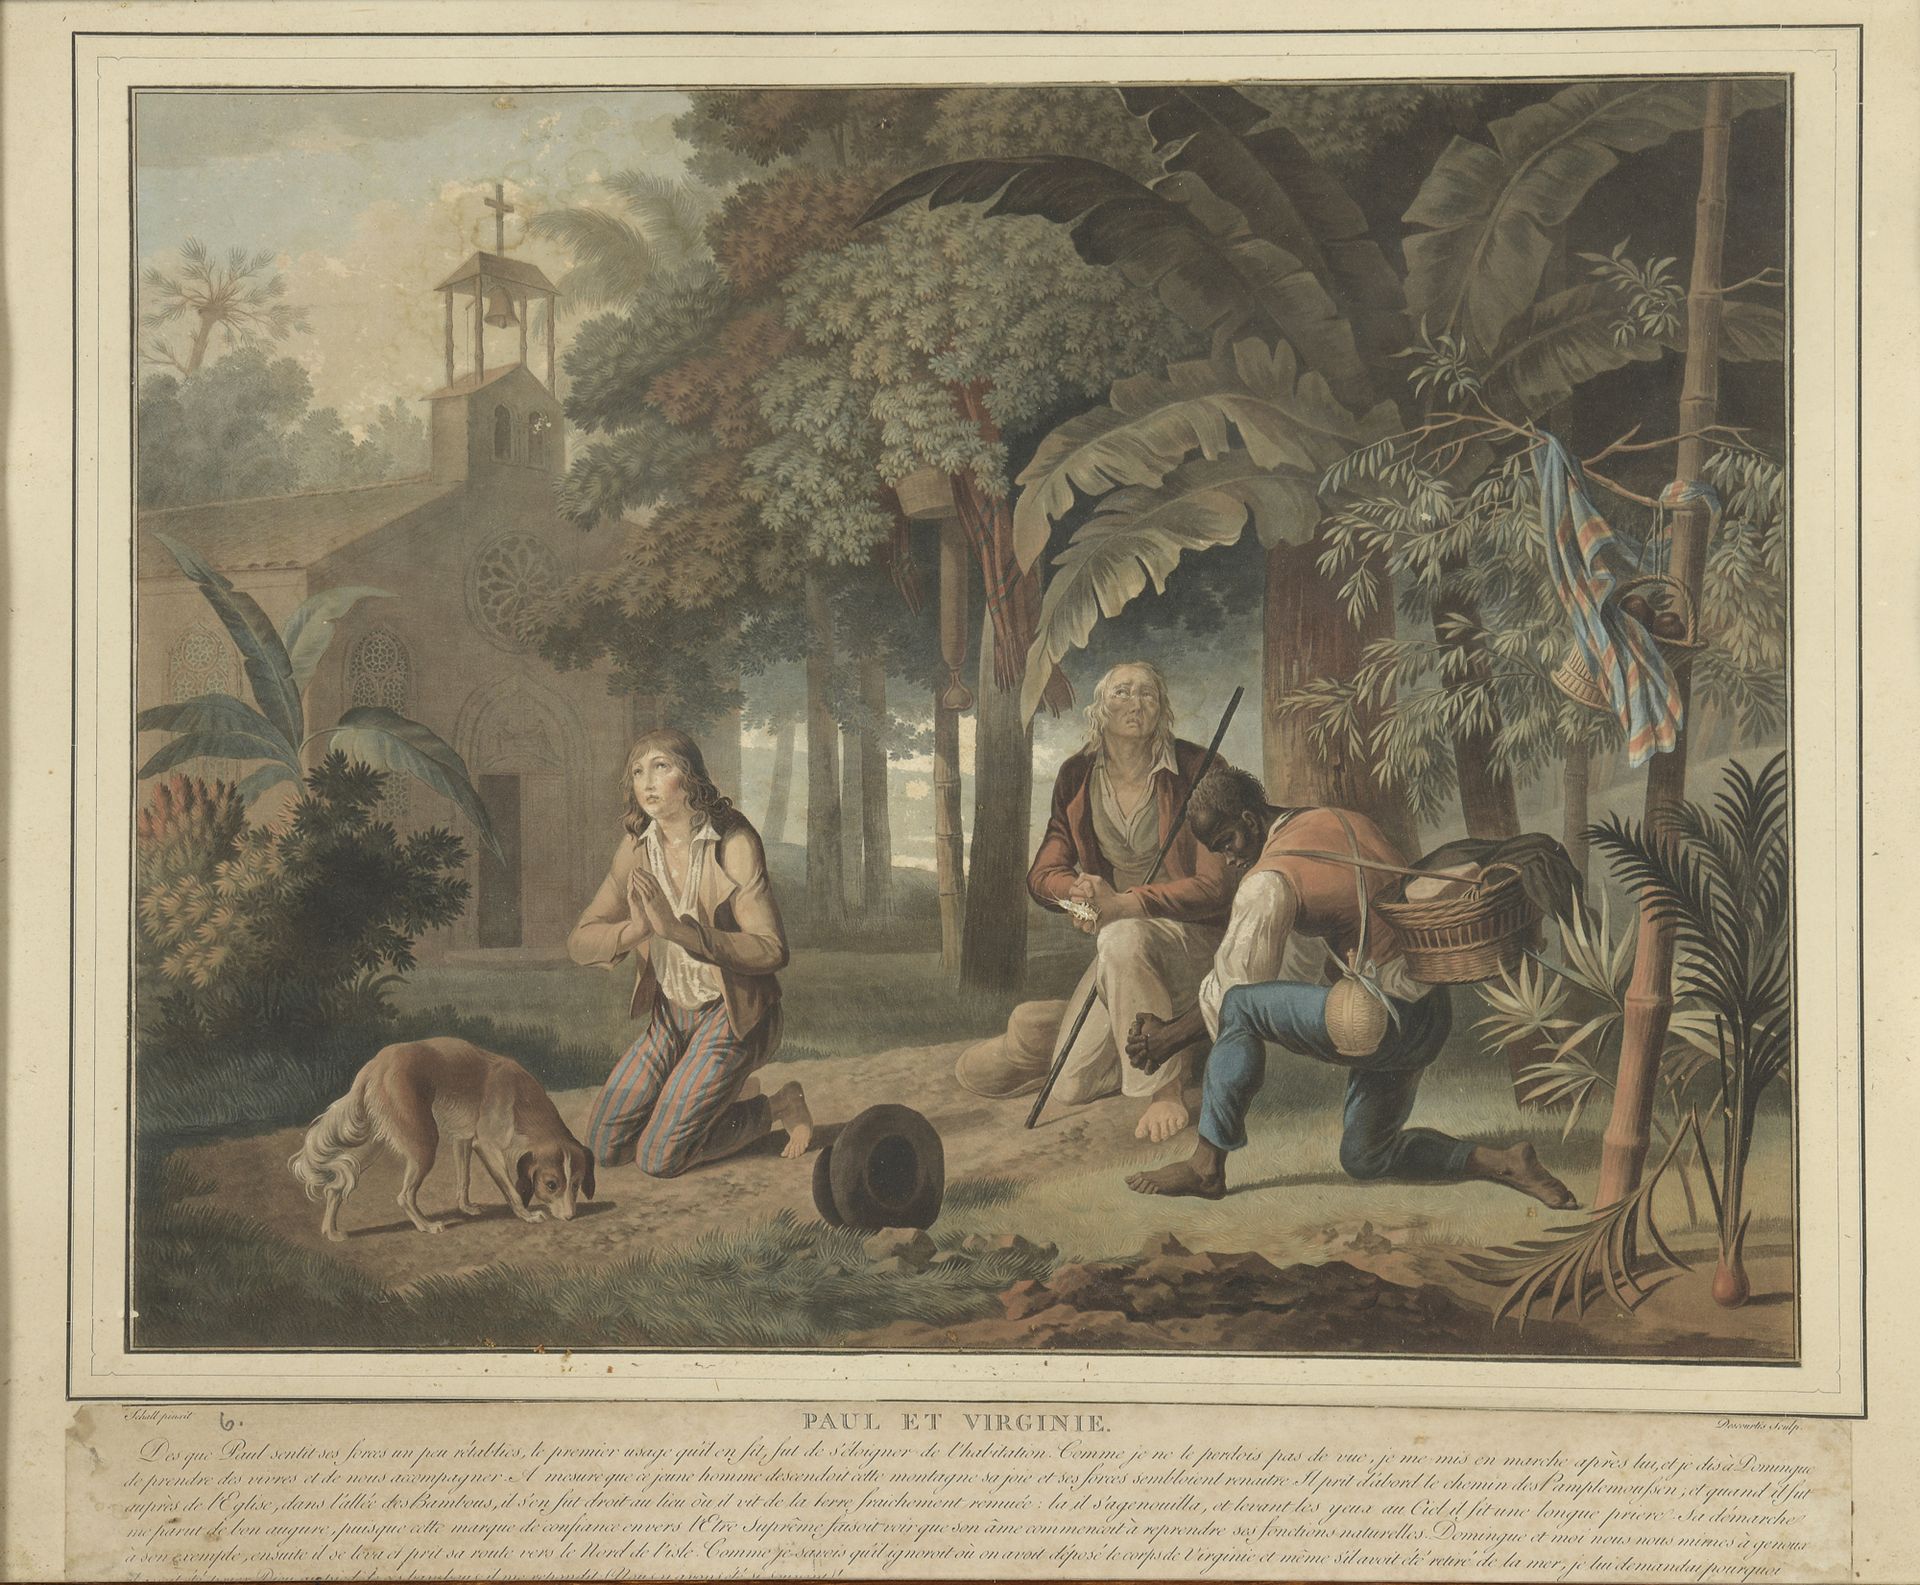 Null Charles- Melchior DESCOURTIS (1753 - 1820)

Paul y Virginia. 

Suite de sei&hellip;